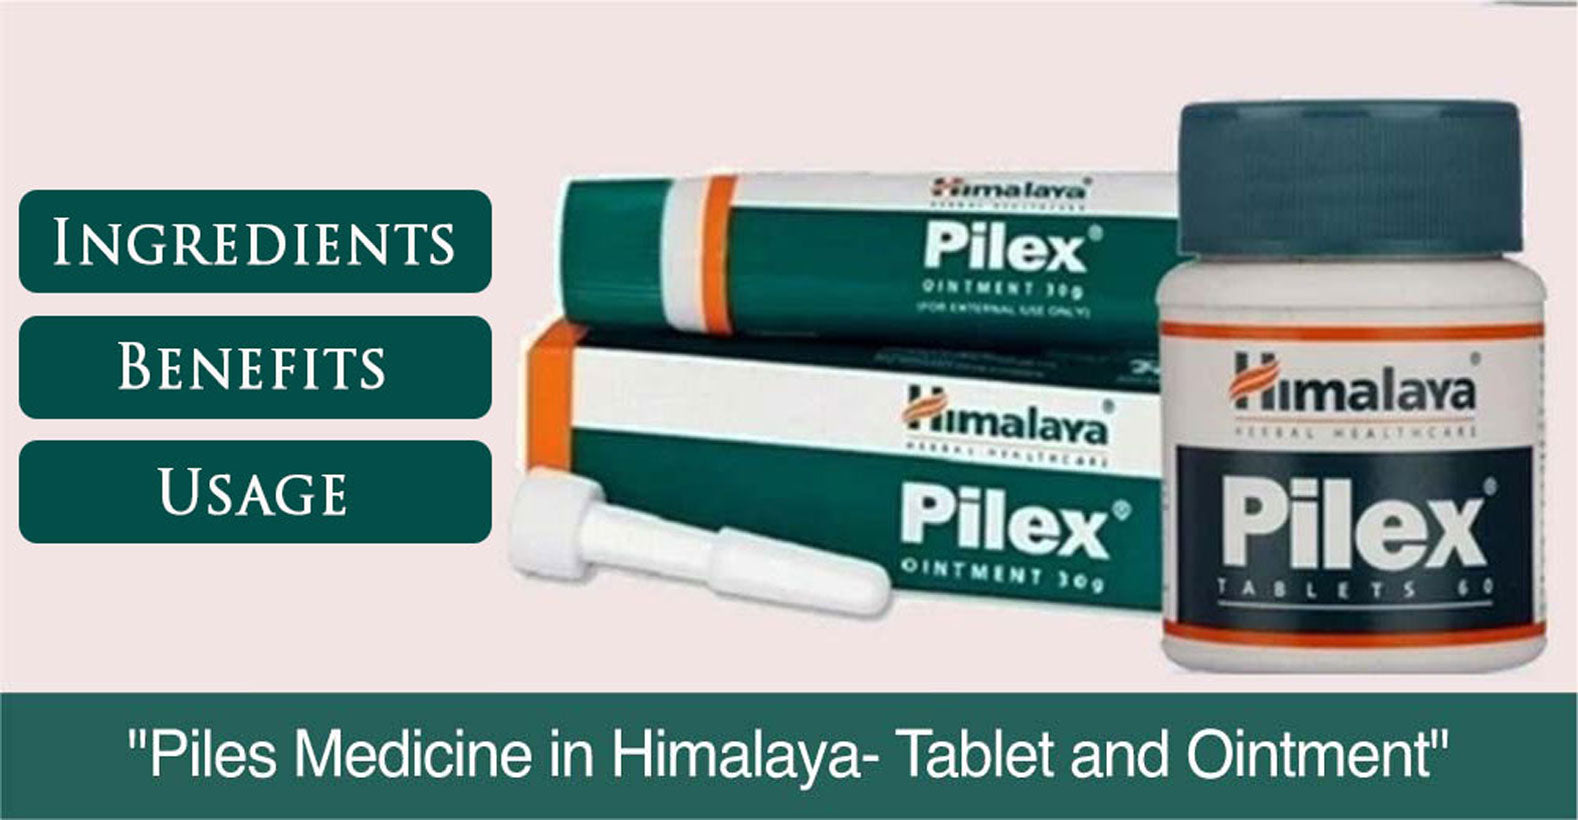 Himalaya Pilex Tablets & Ointment